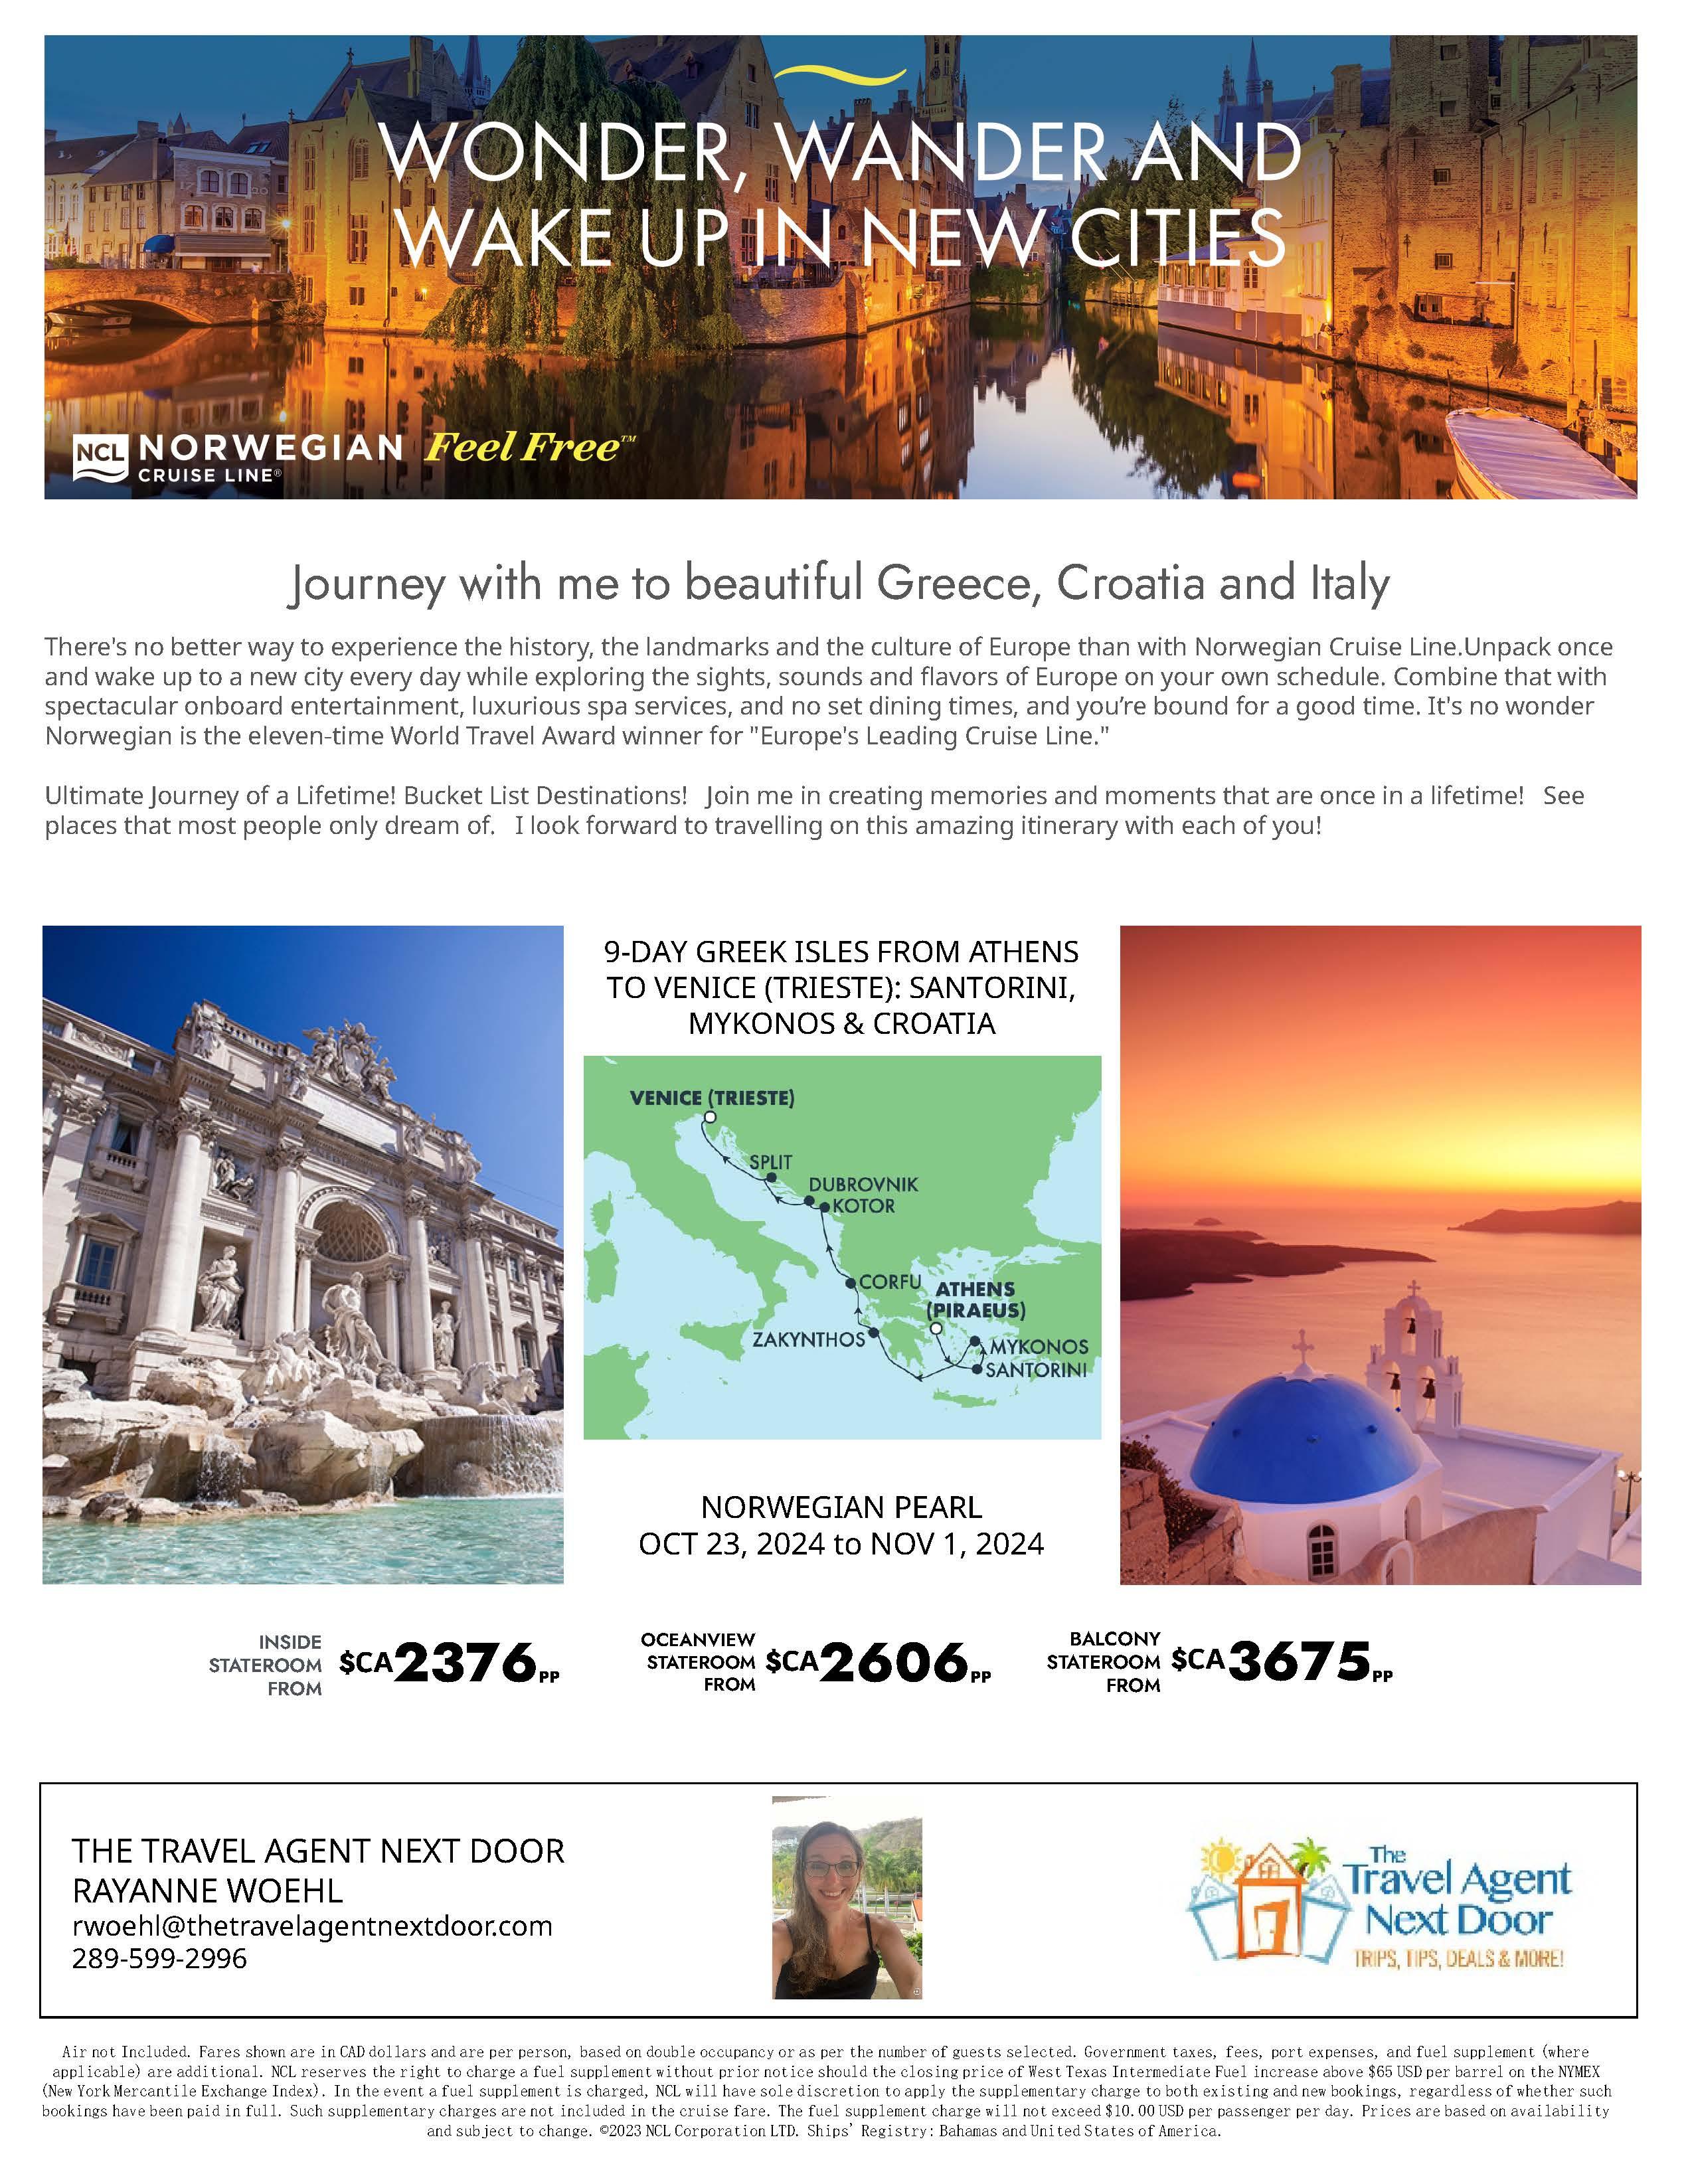 Journey to Greece, Croatia and Italy 2024